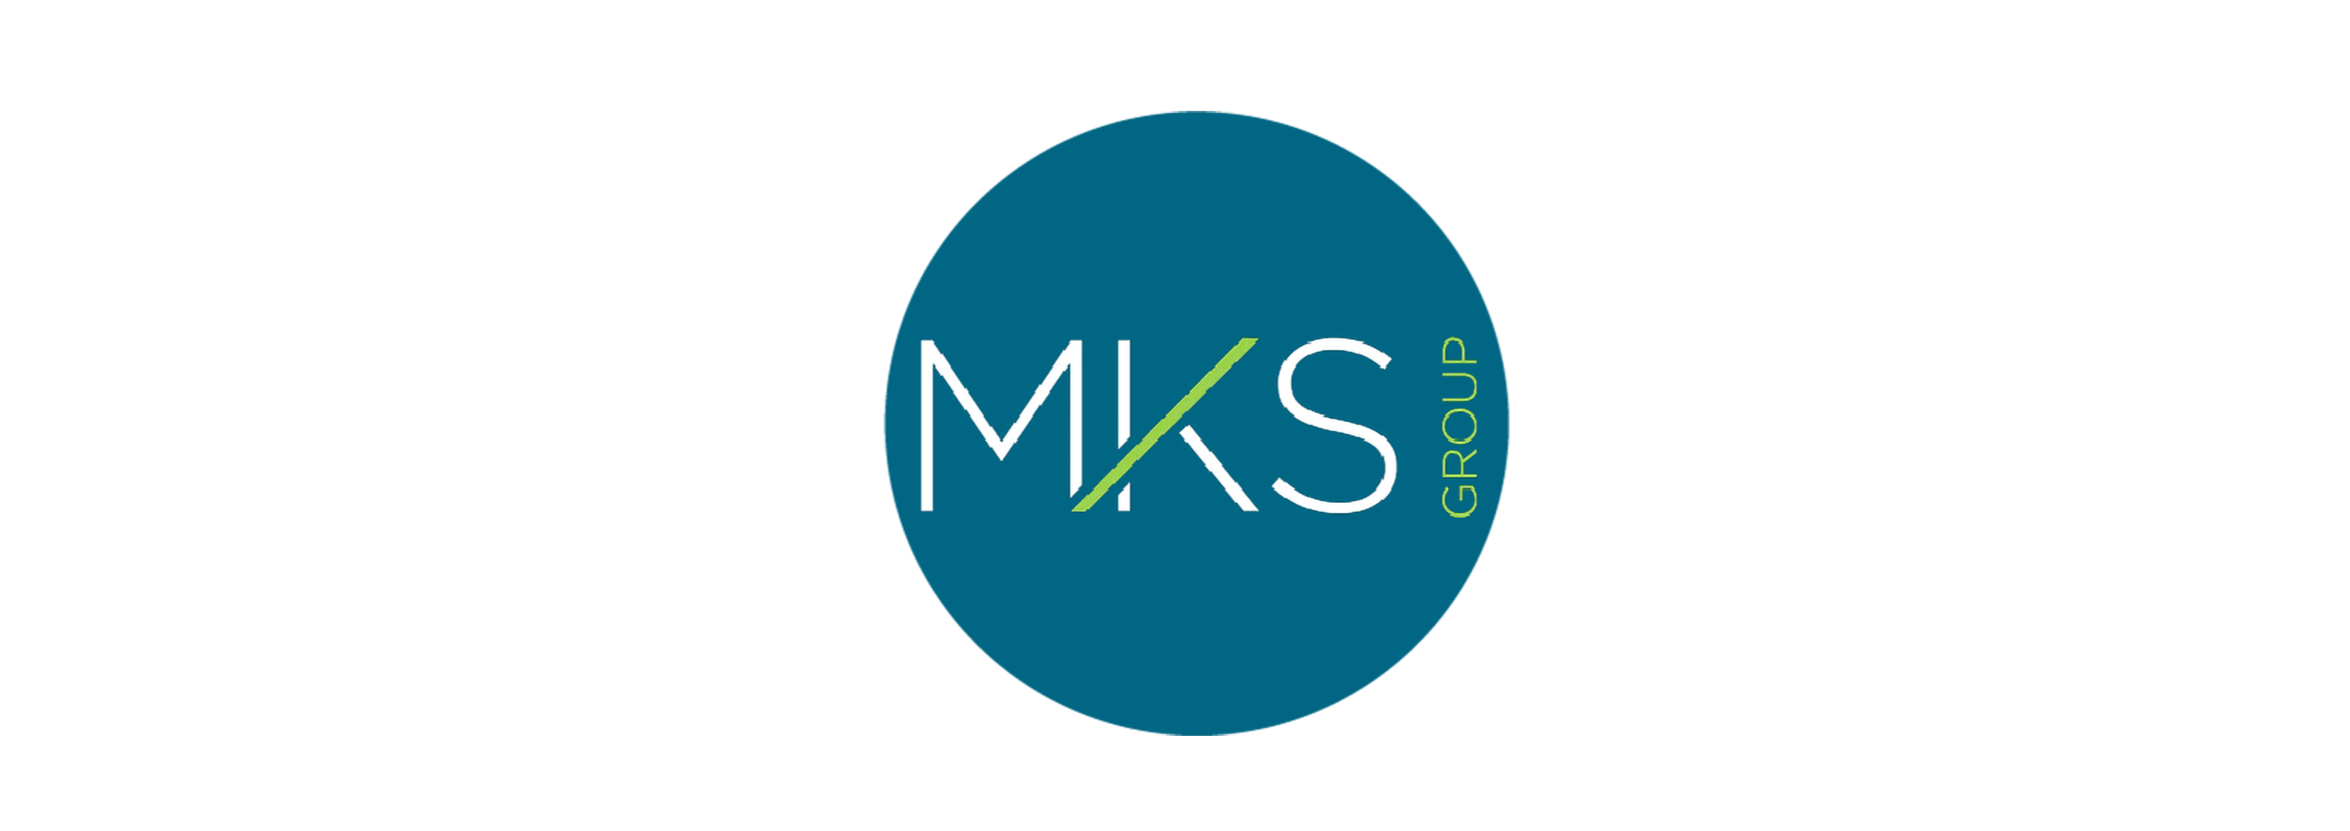 The MKS Group logo